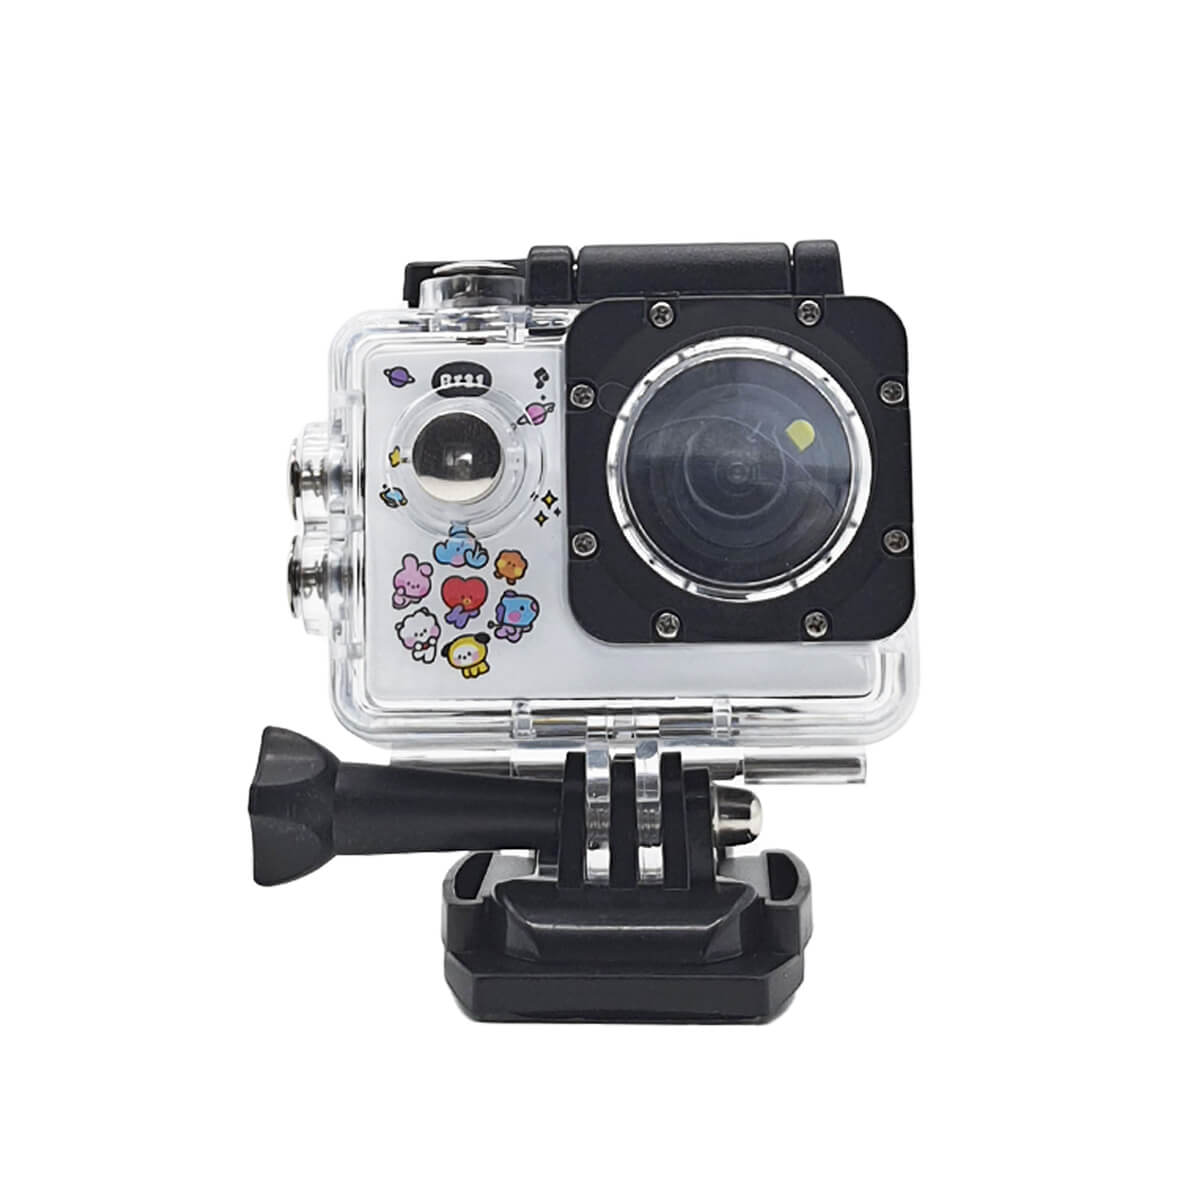 BT21 minini Waterproof Action Camera